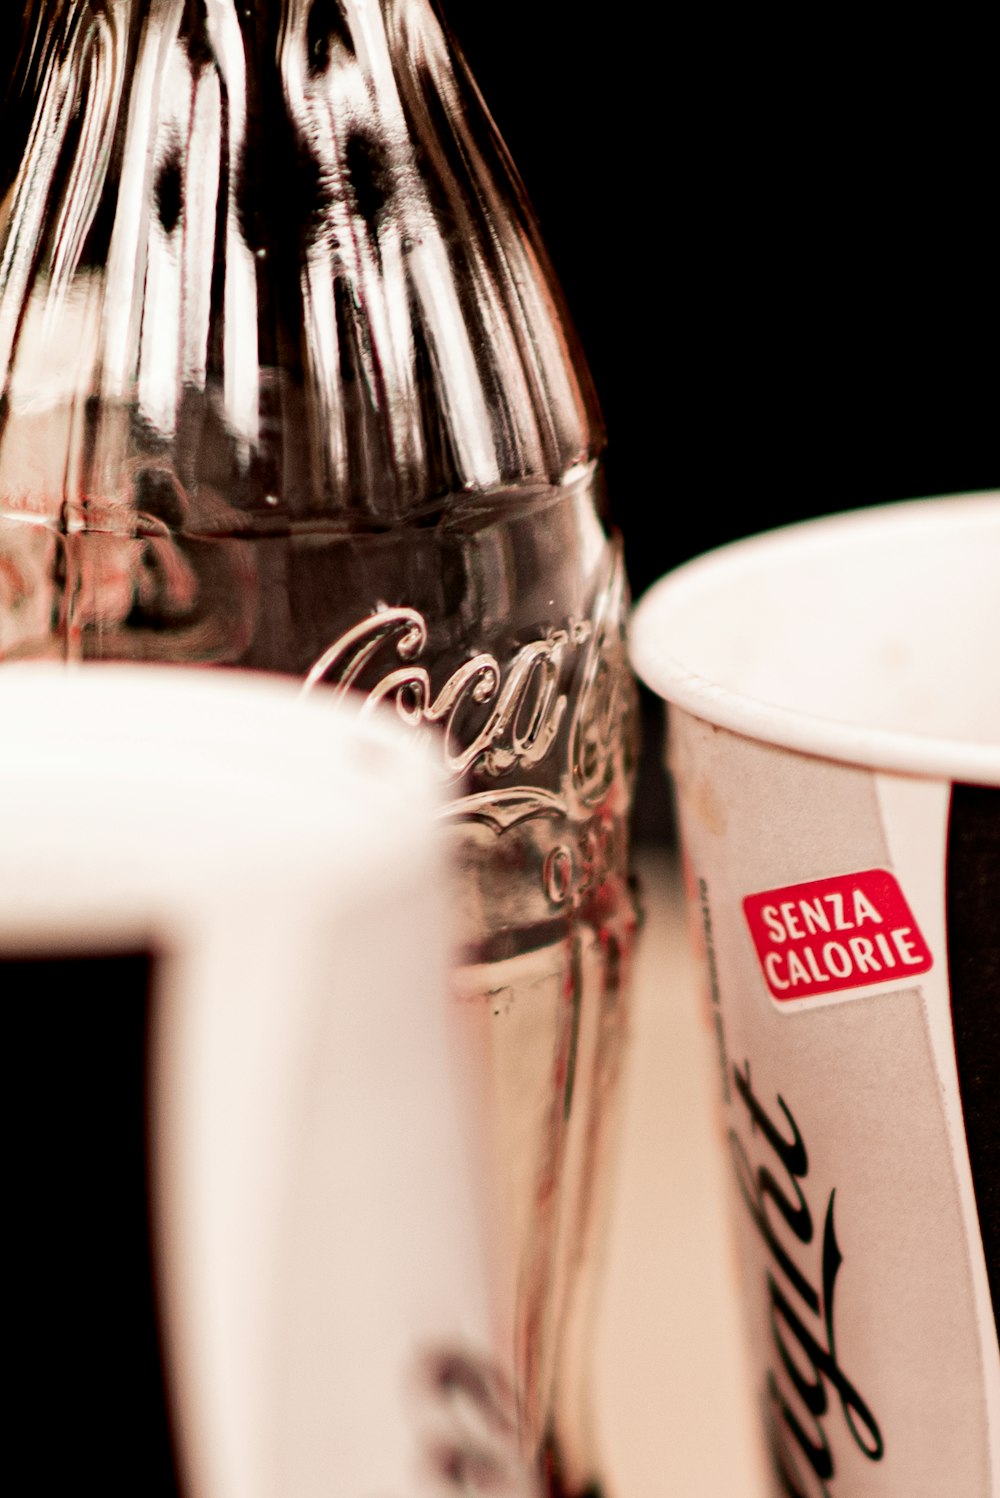 coca cola bottle beside white ceramic mug